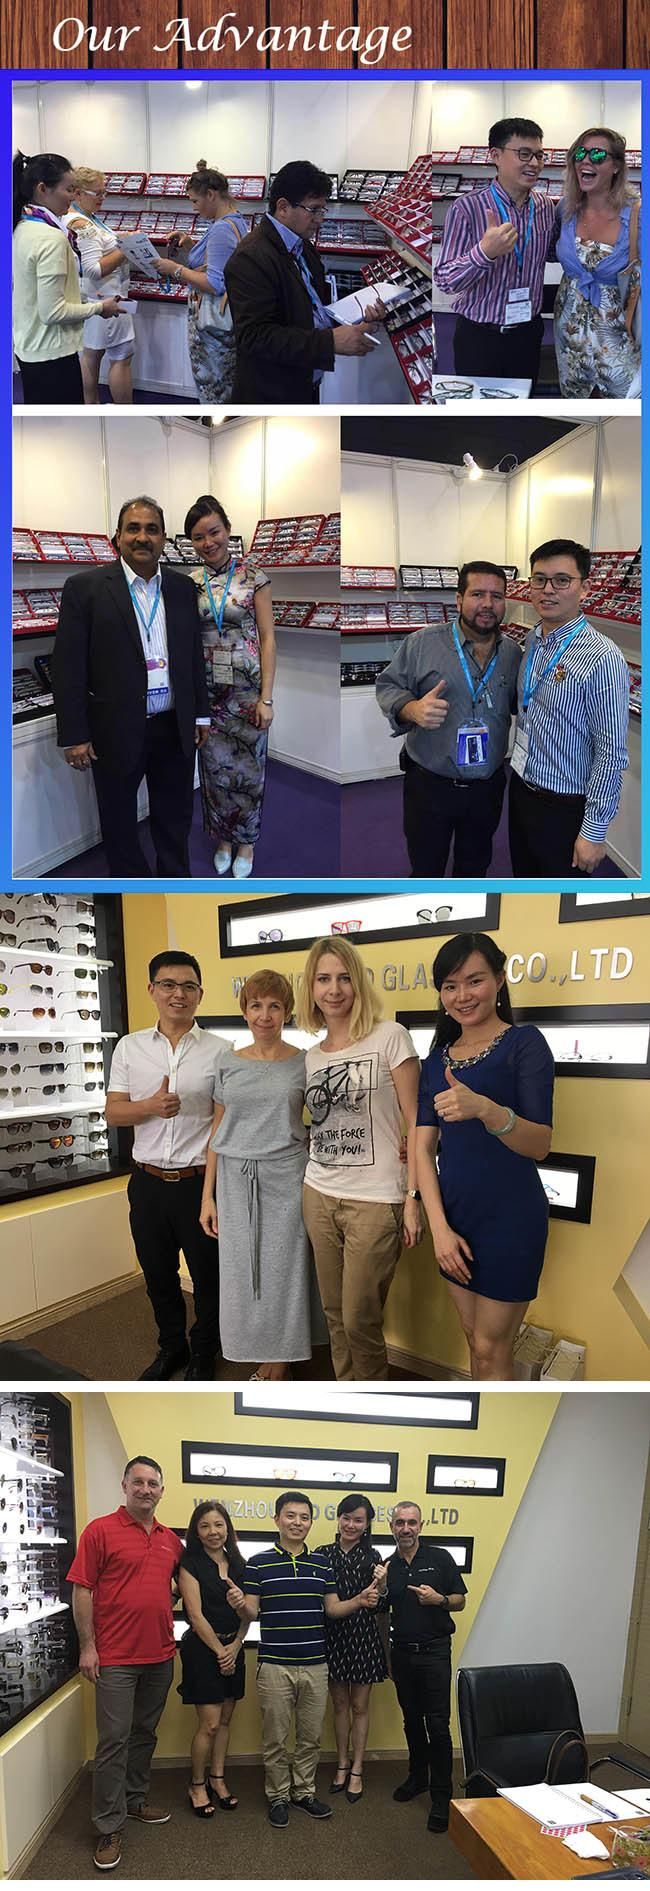 Fashion Style New Design China Manufacture Wholesale Make Order Frame Sunglasses